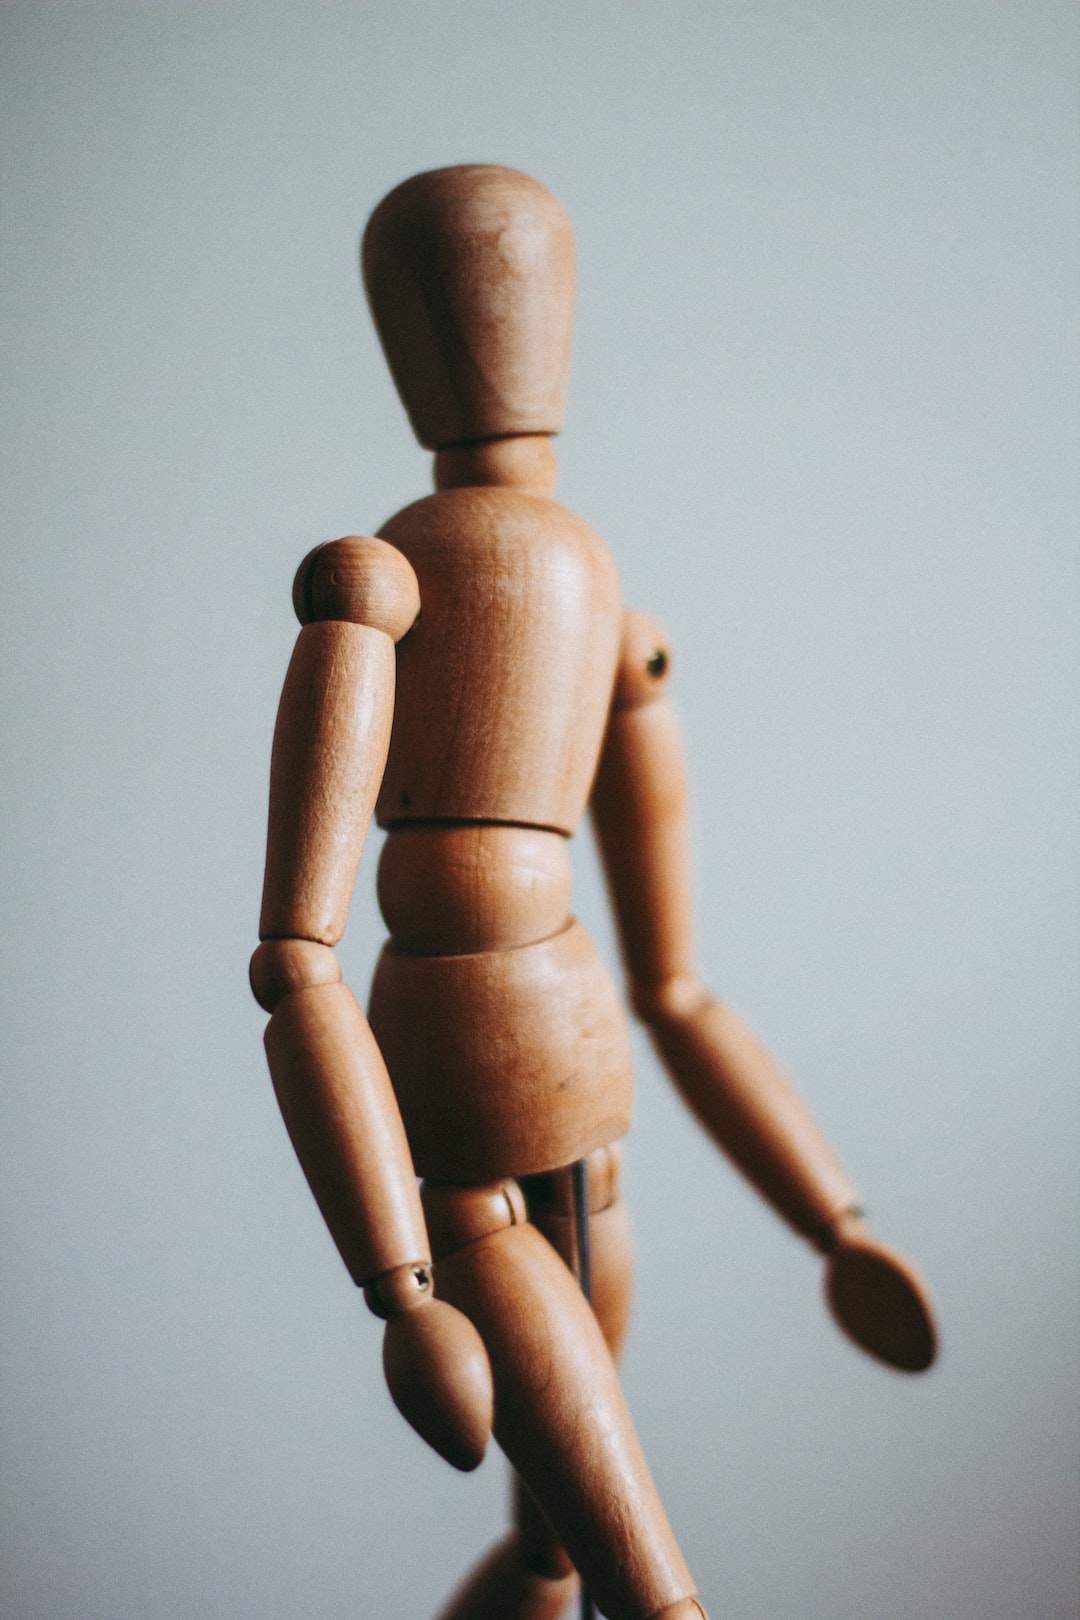 Wooden model doll